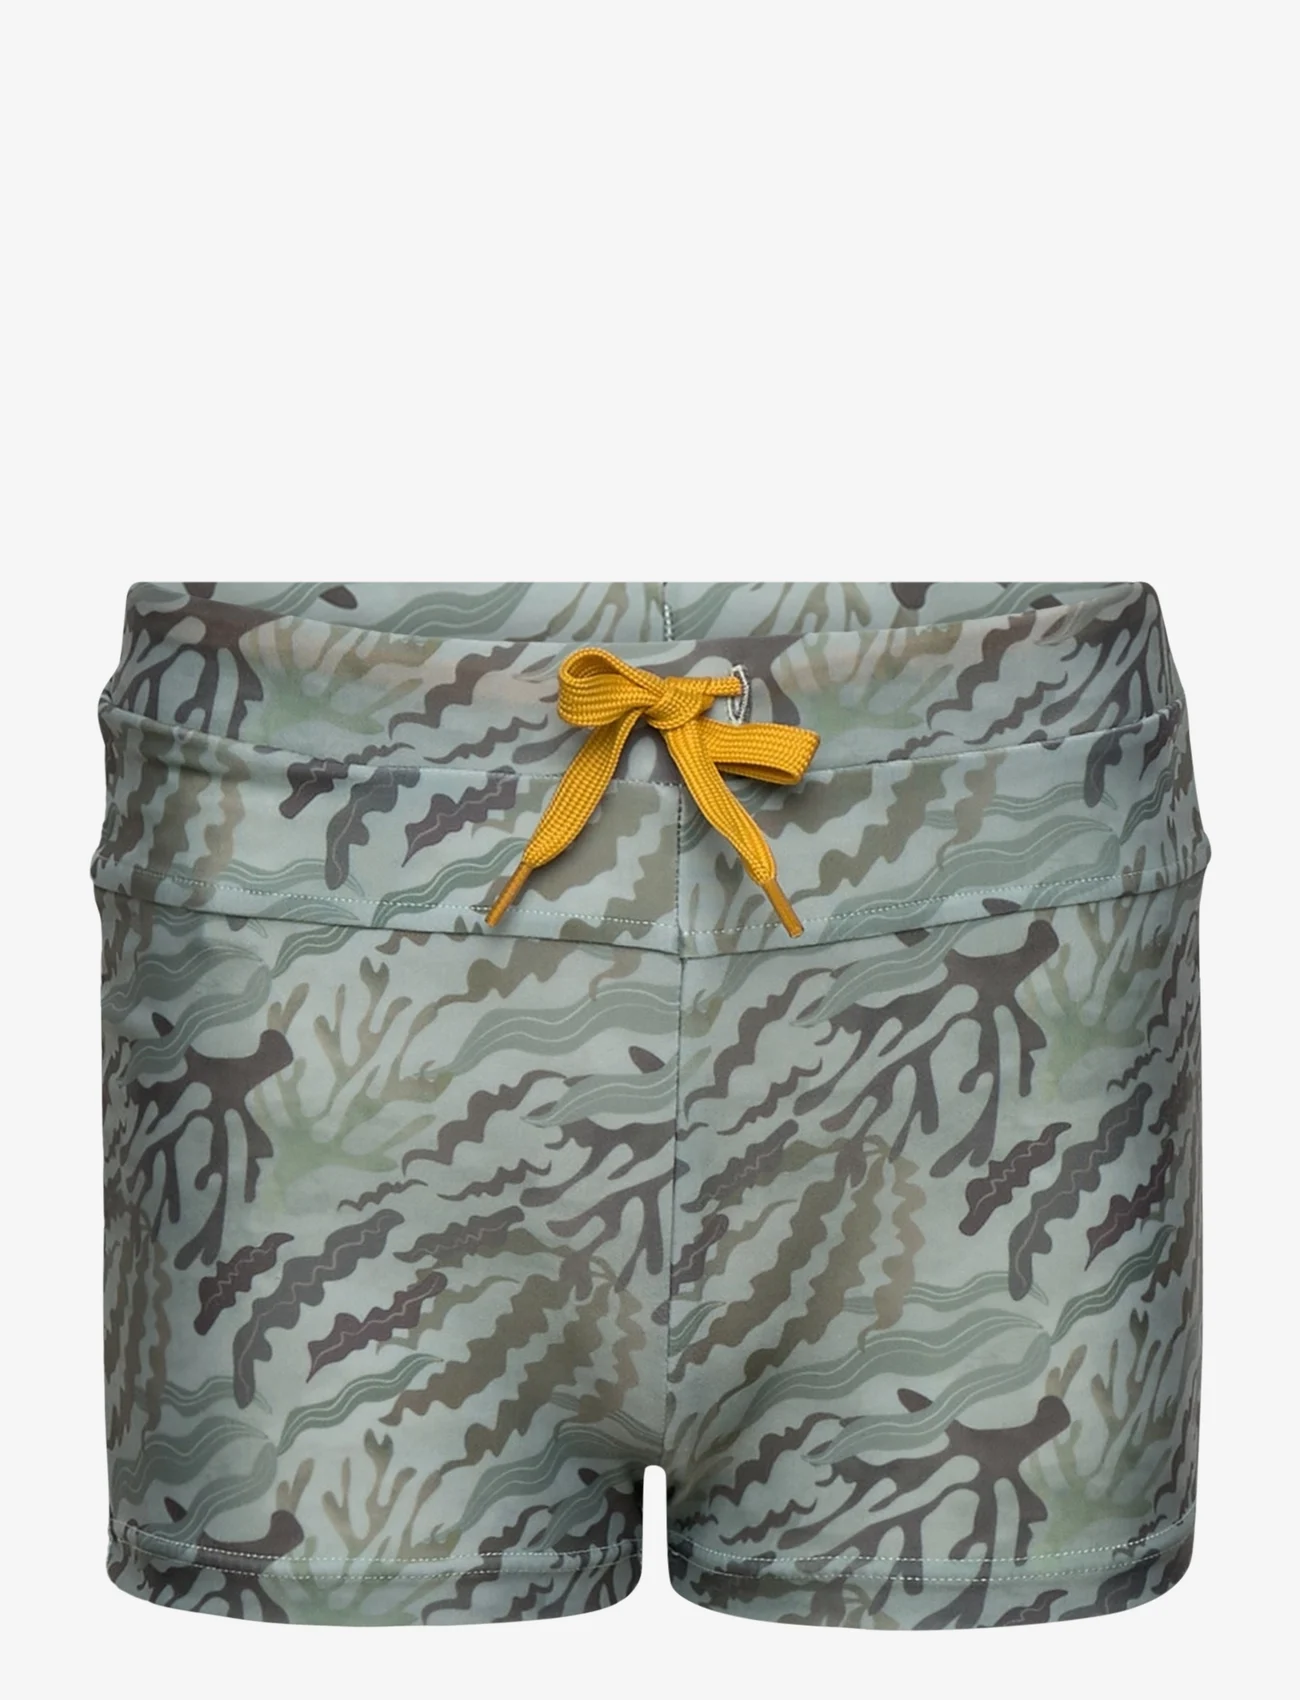 Mini A Ture - Gerryan printed swim shorts - letnie okazje - print sea weed camo - 0